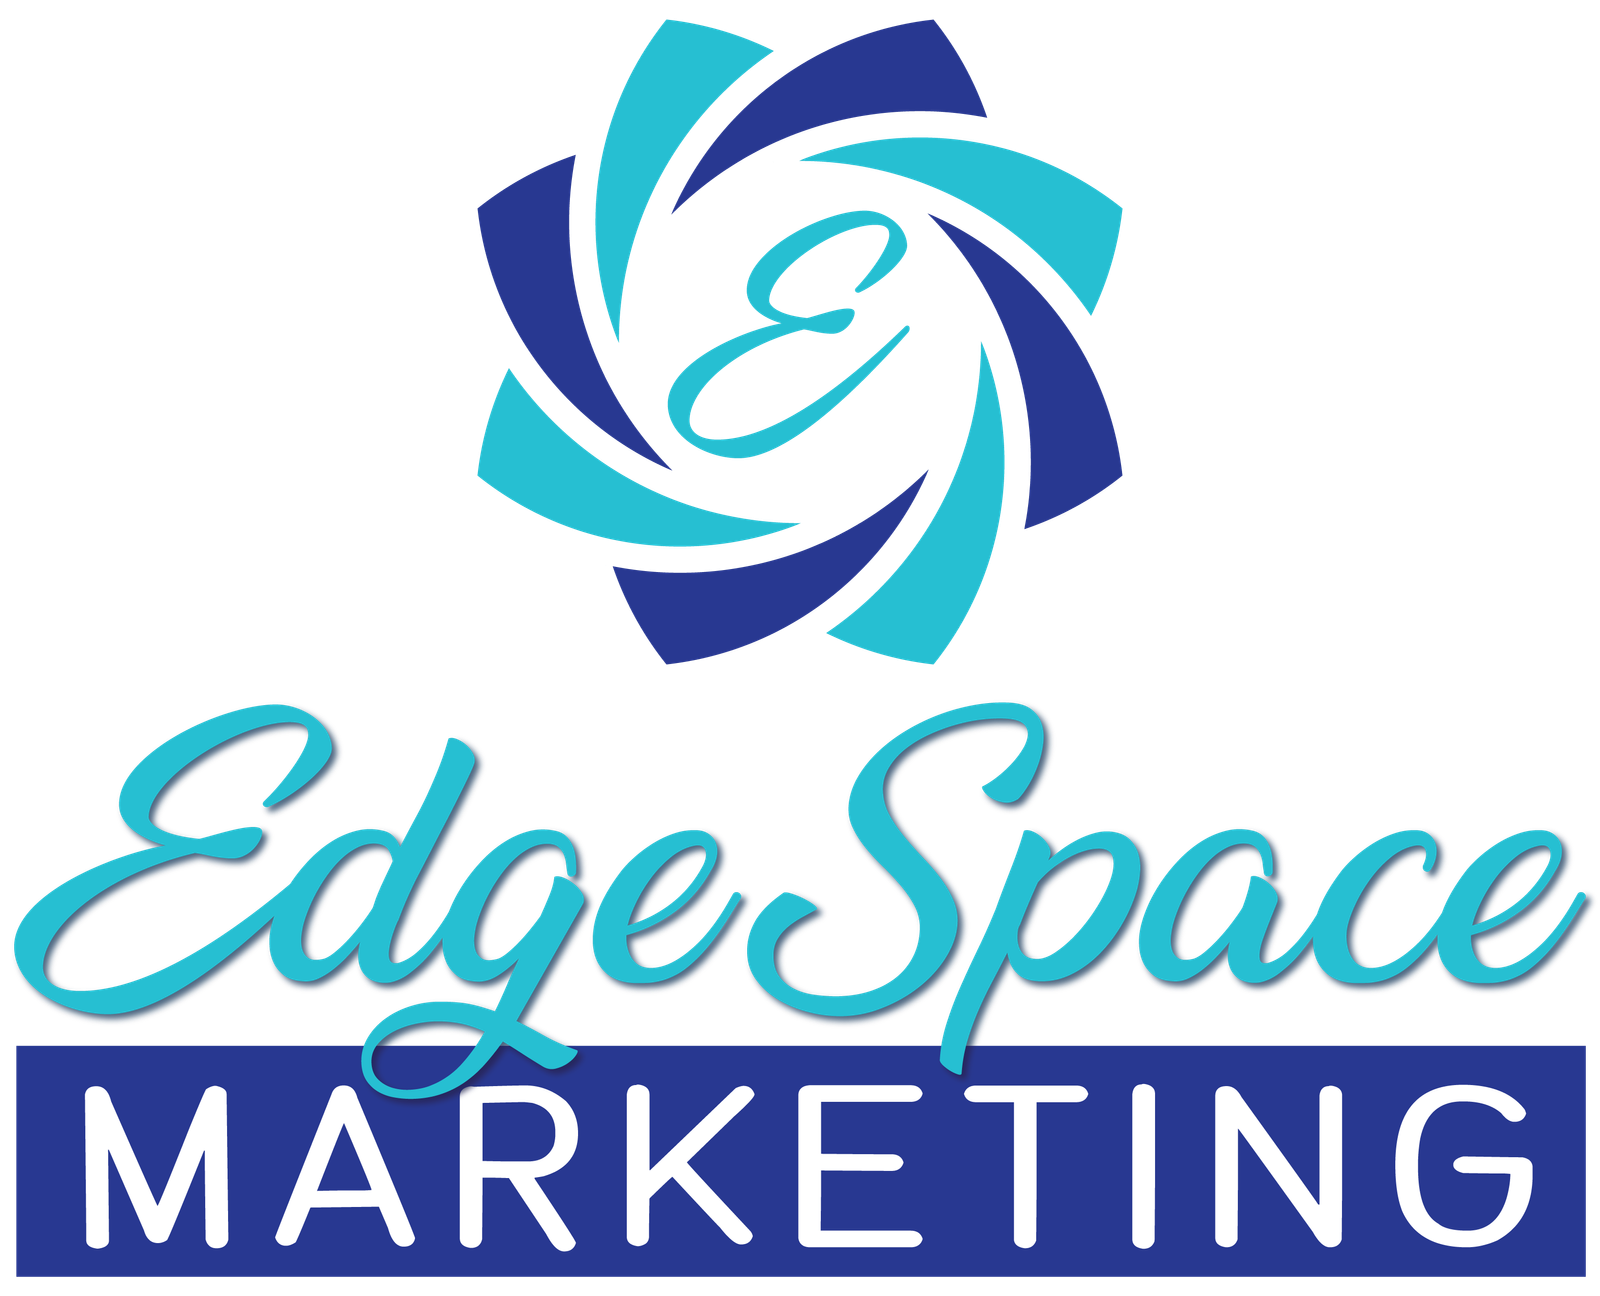 Edge Space Marketing